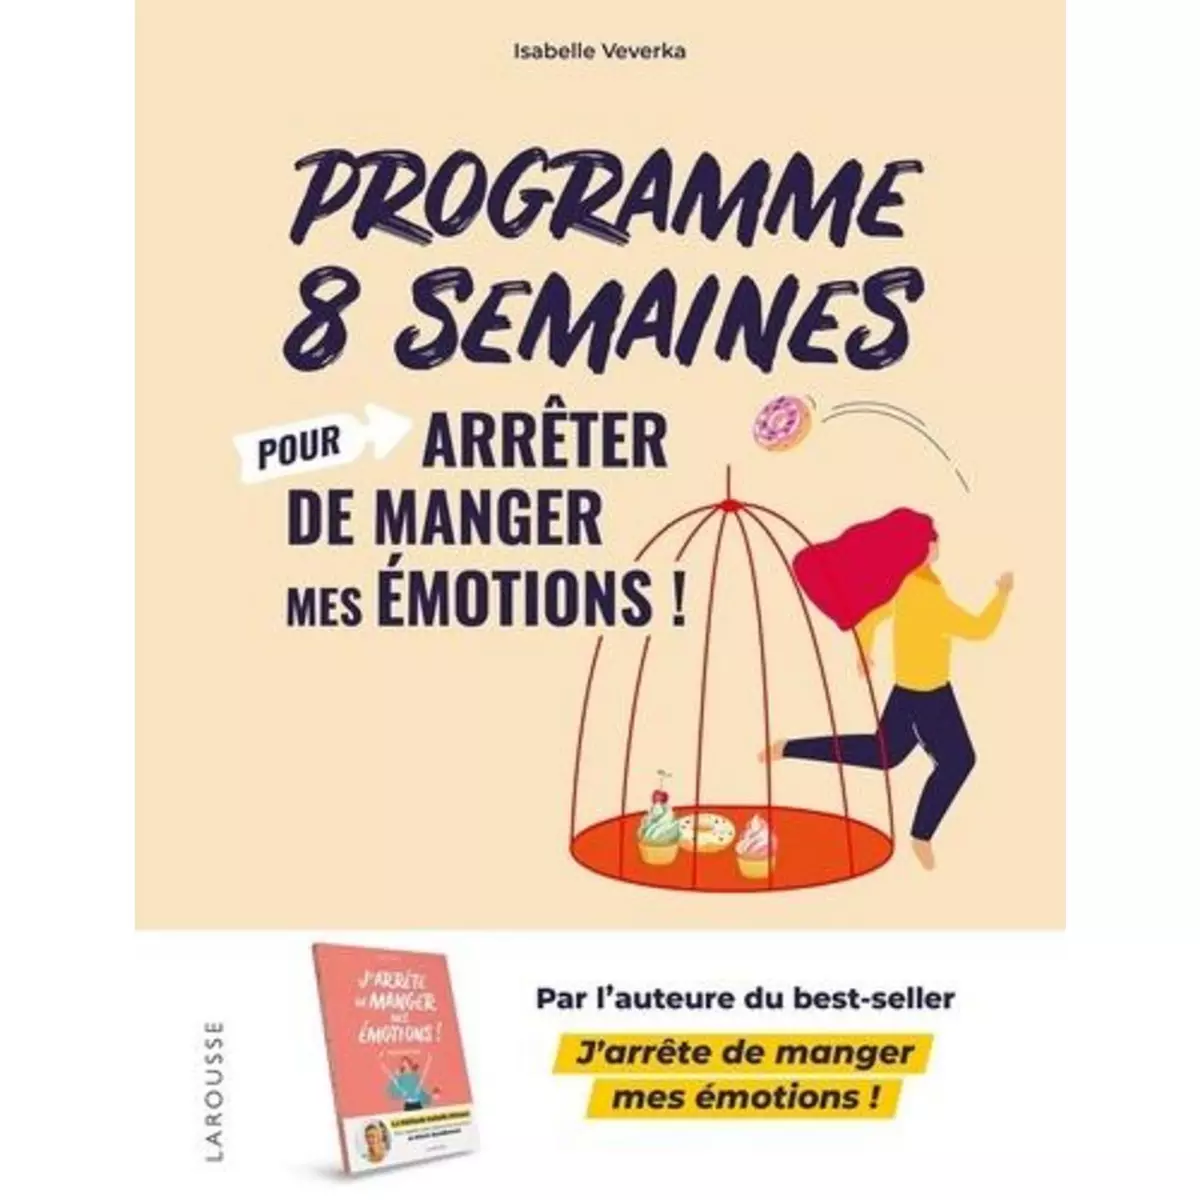  PROGRAMME 8 SEMAINES POUR ARRETER DE MANGER MES EMOTIONS !, Veverka Isabelle